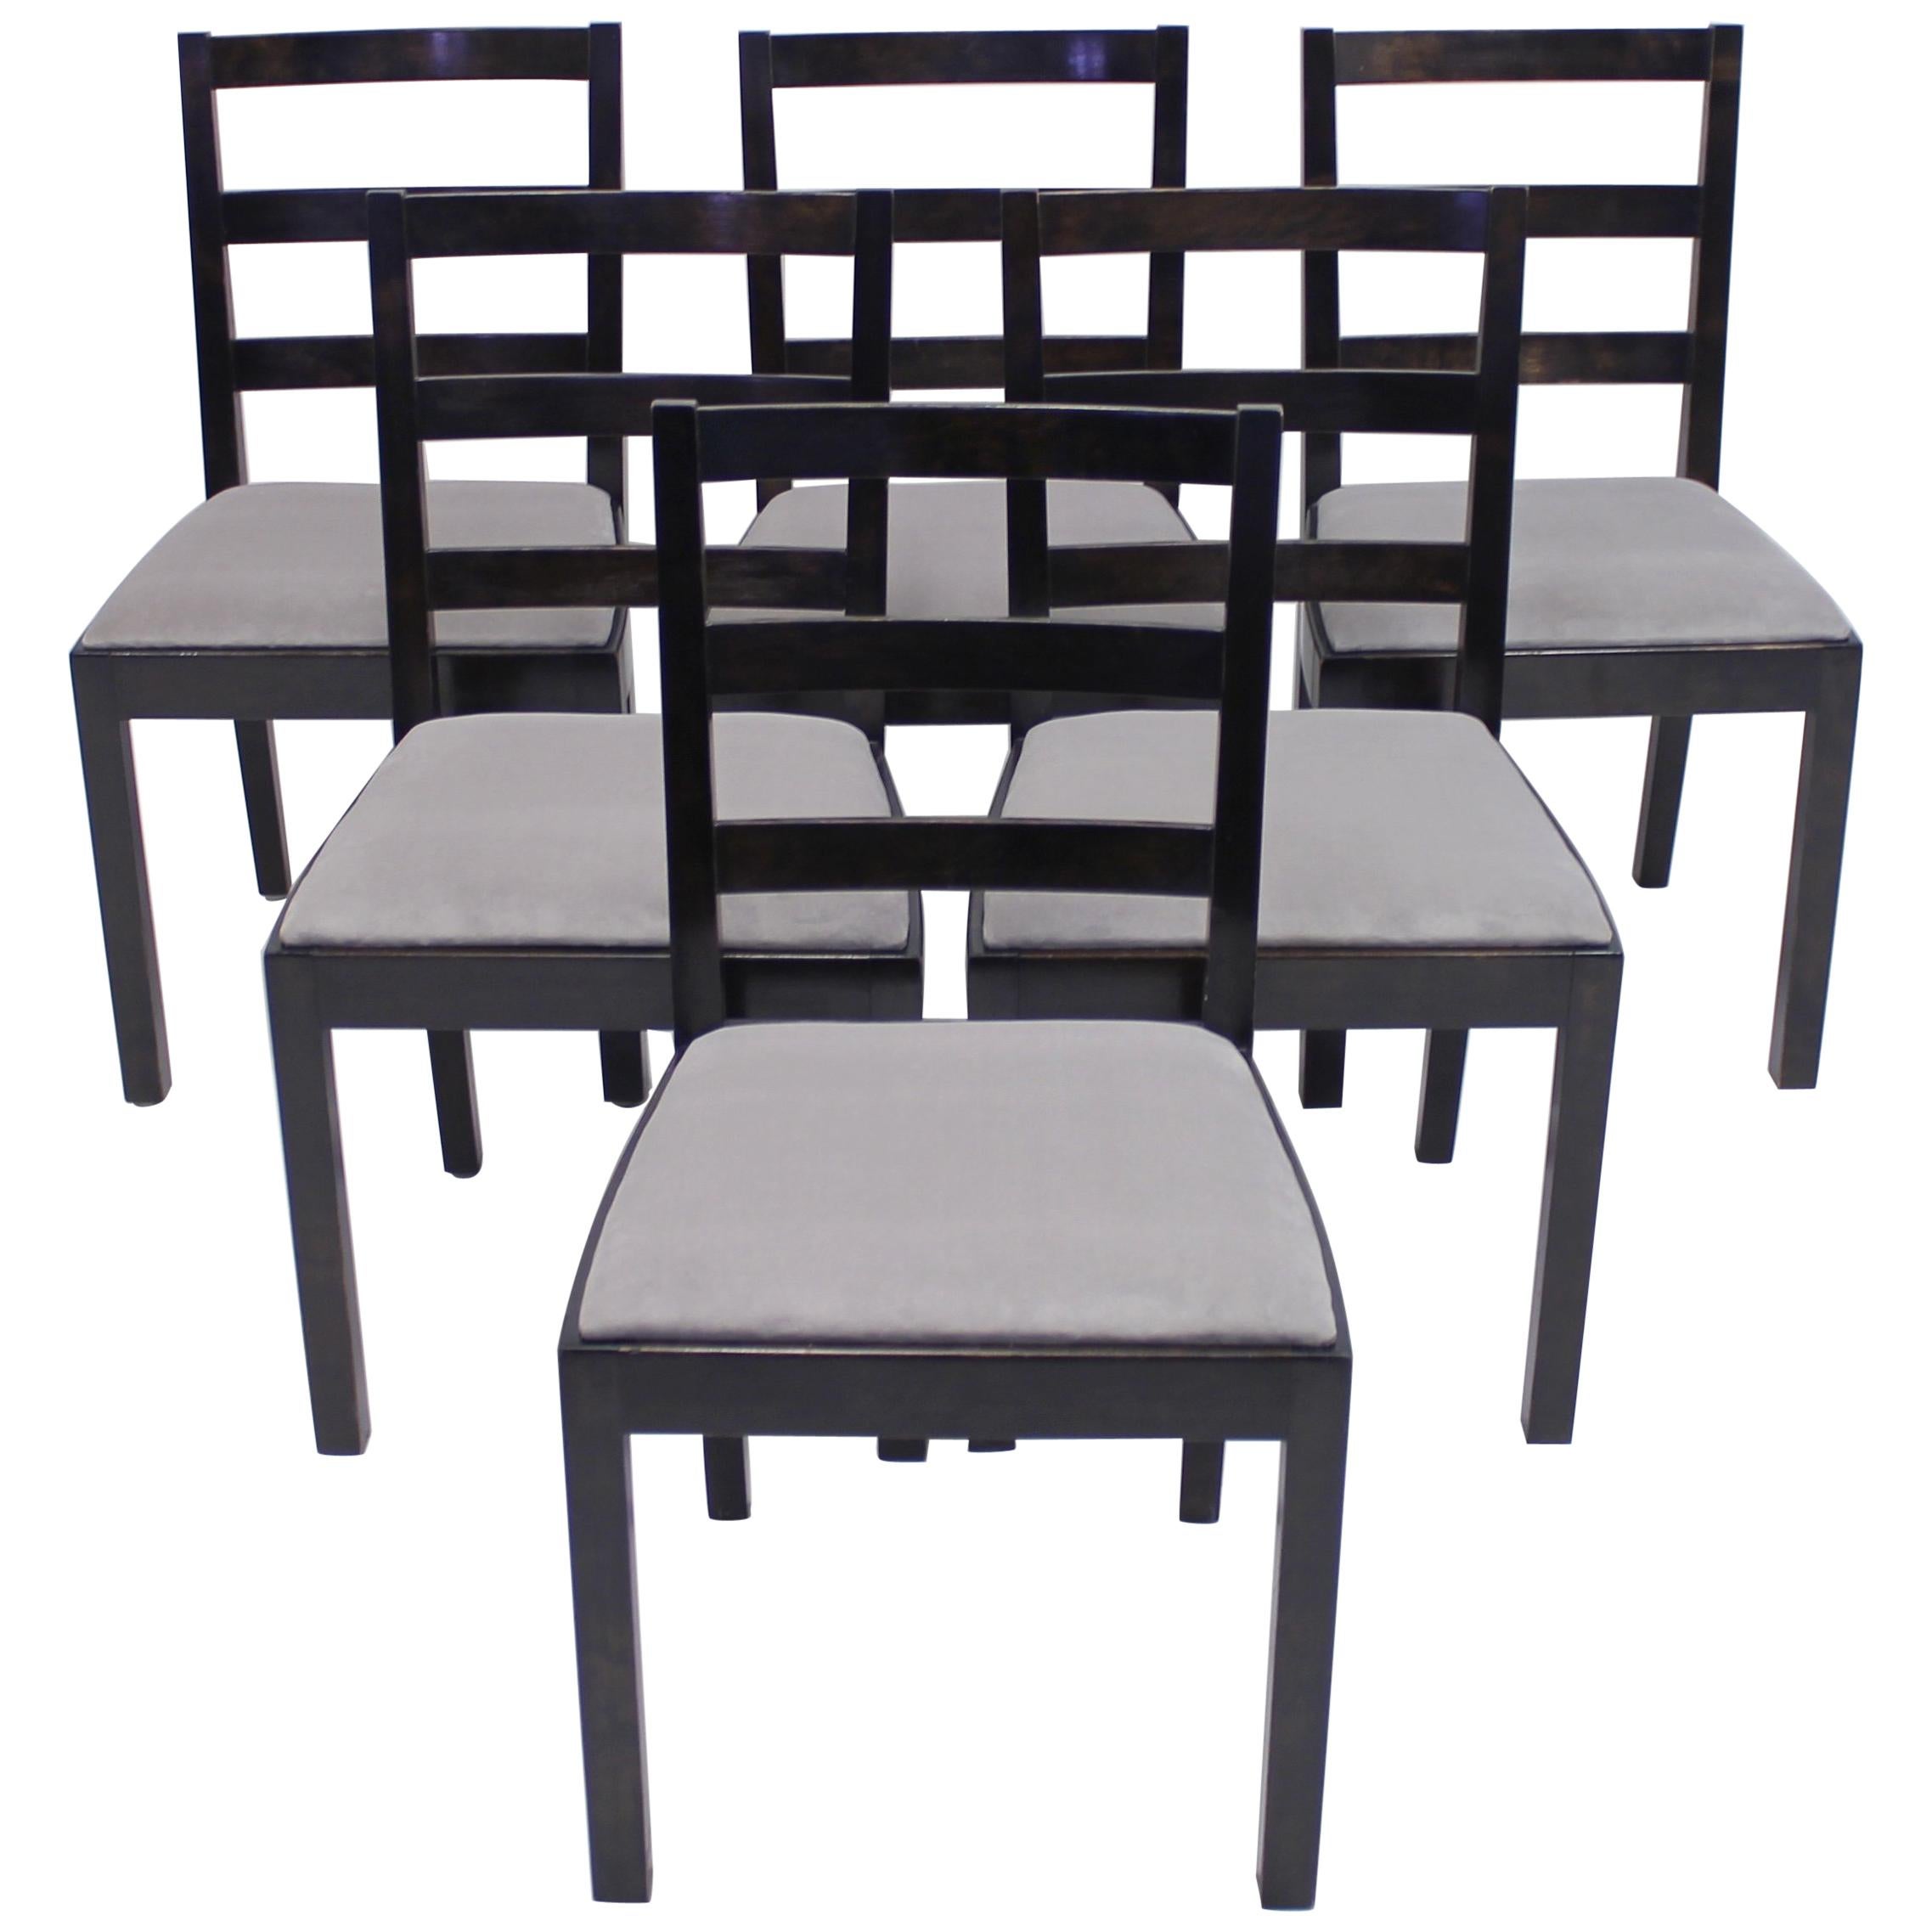 Typenko Chairs by Axel Einar Hjorth for Nordiska Kompaniet, 1930s, Set of 6